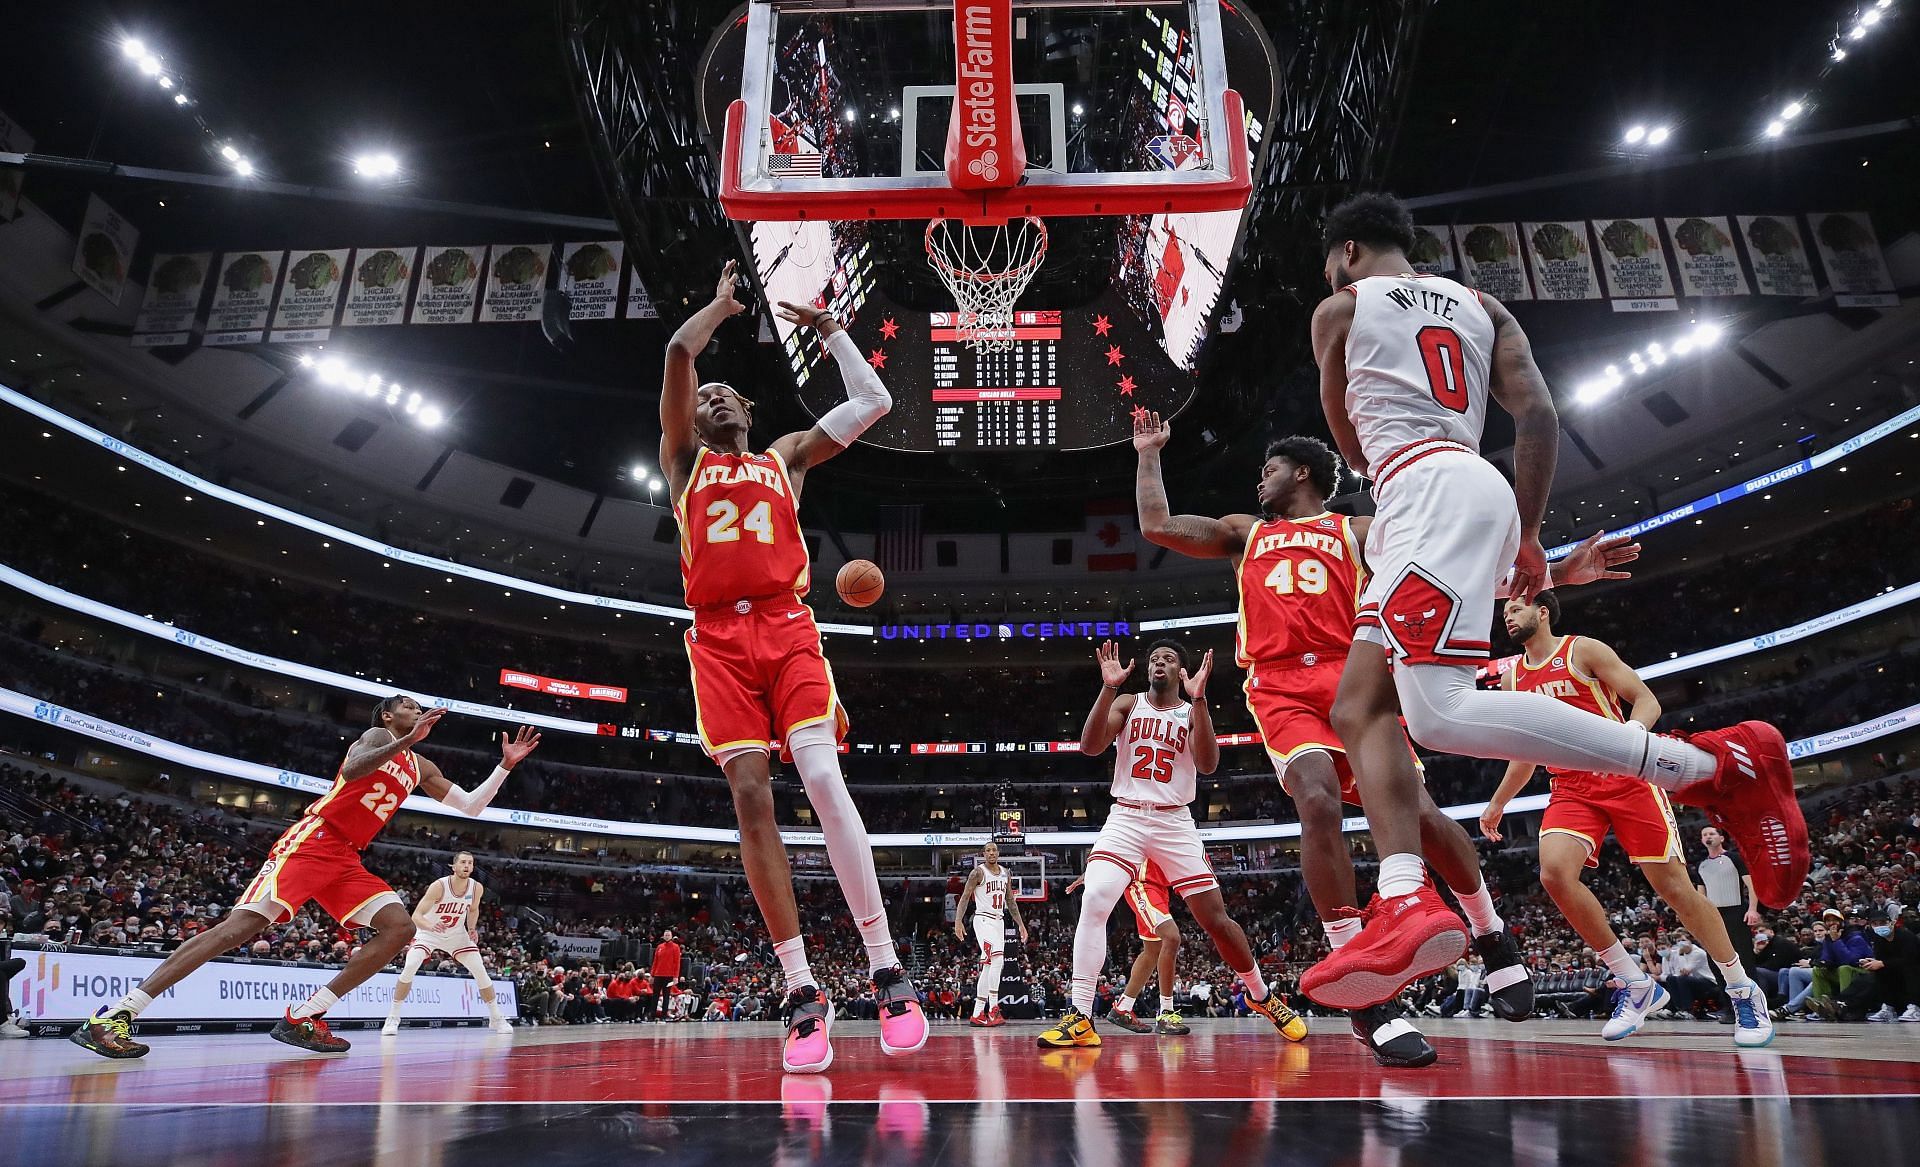 The Atlanta Hawks will host the Chicago Bulls on March 3.